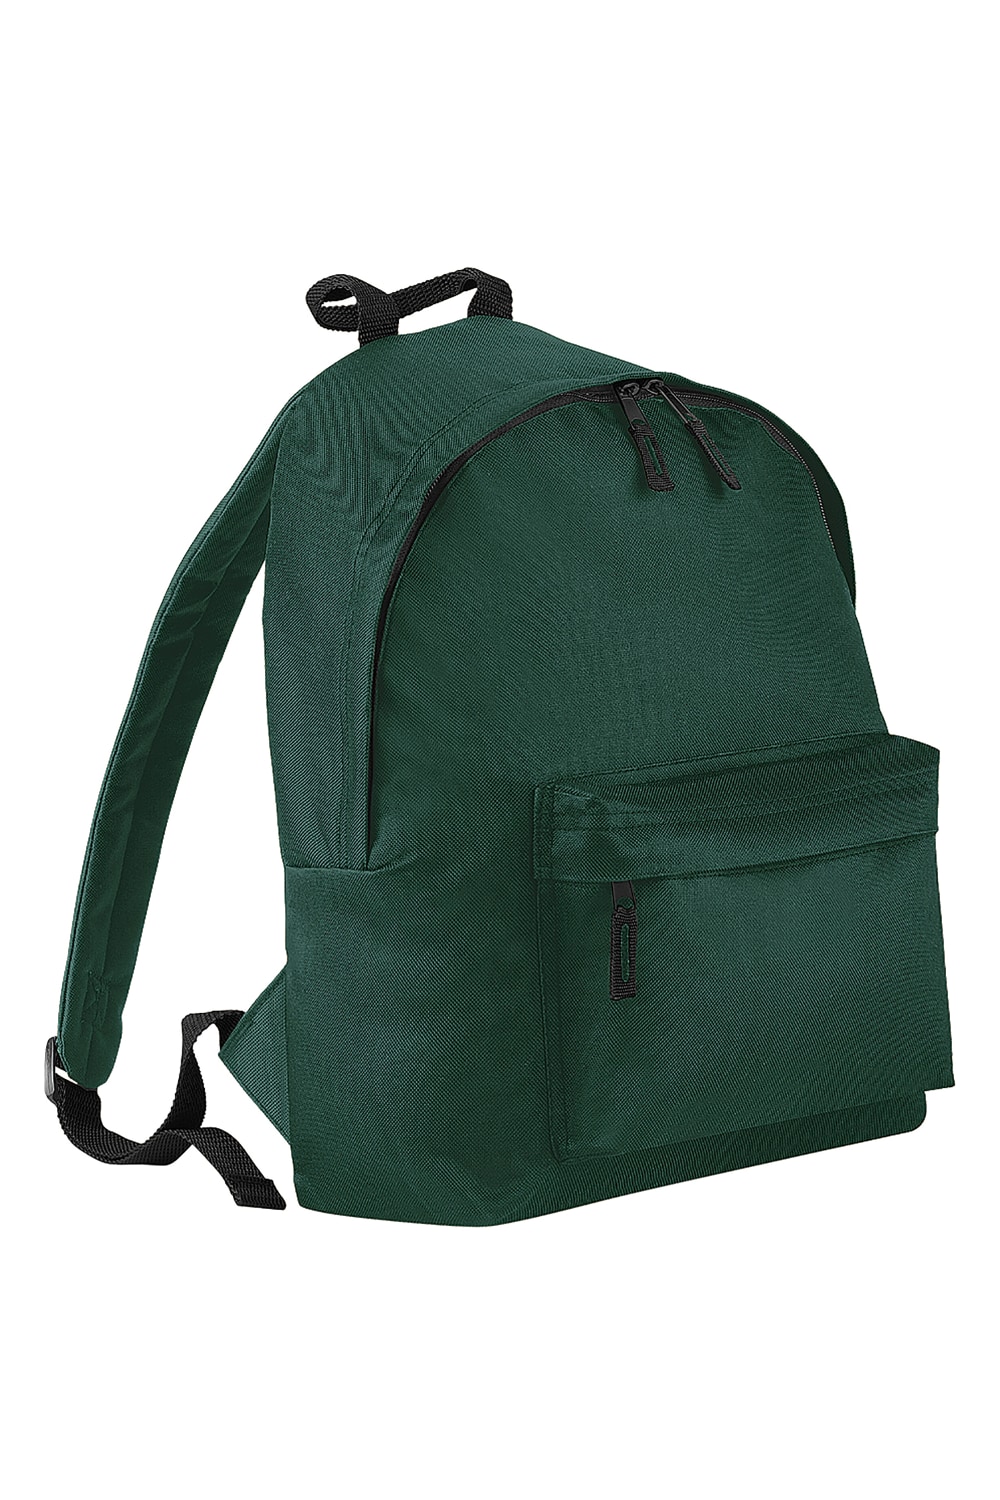 Fashion Backpack / Rucksack Pack Of 2 (18 Liters) - Bottle Green